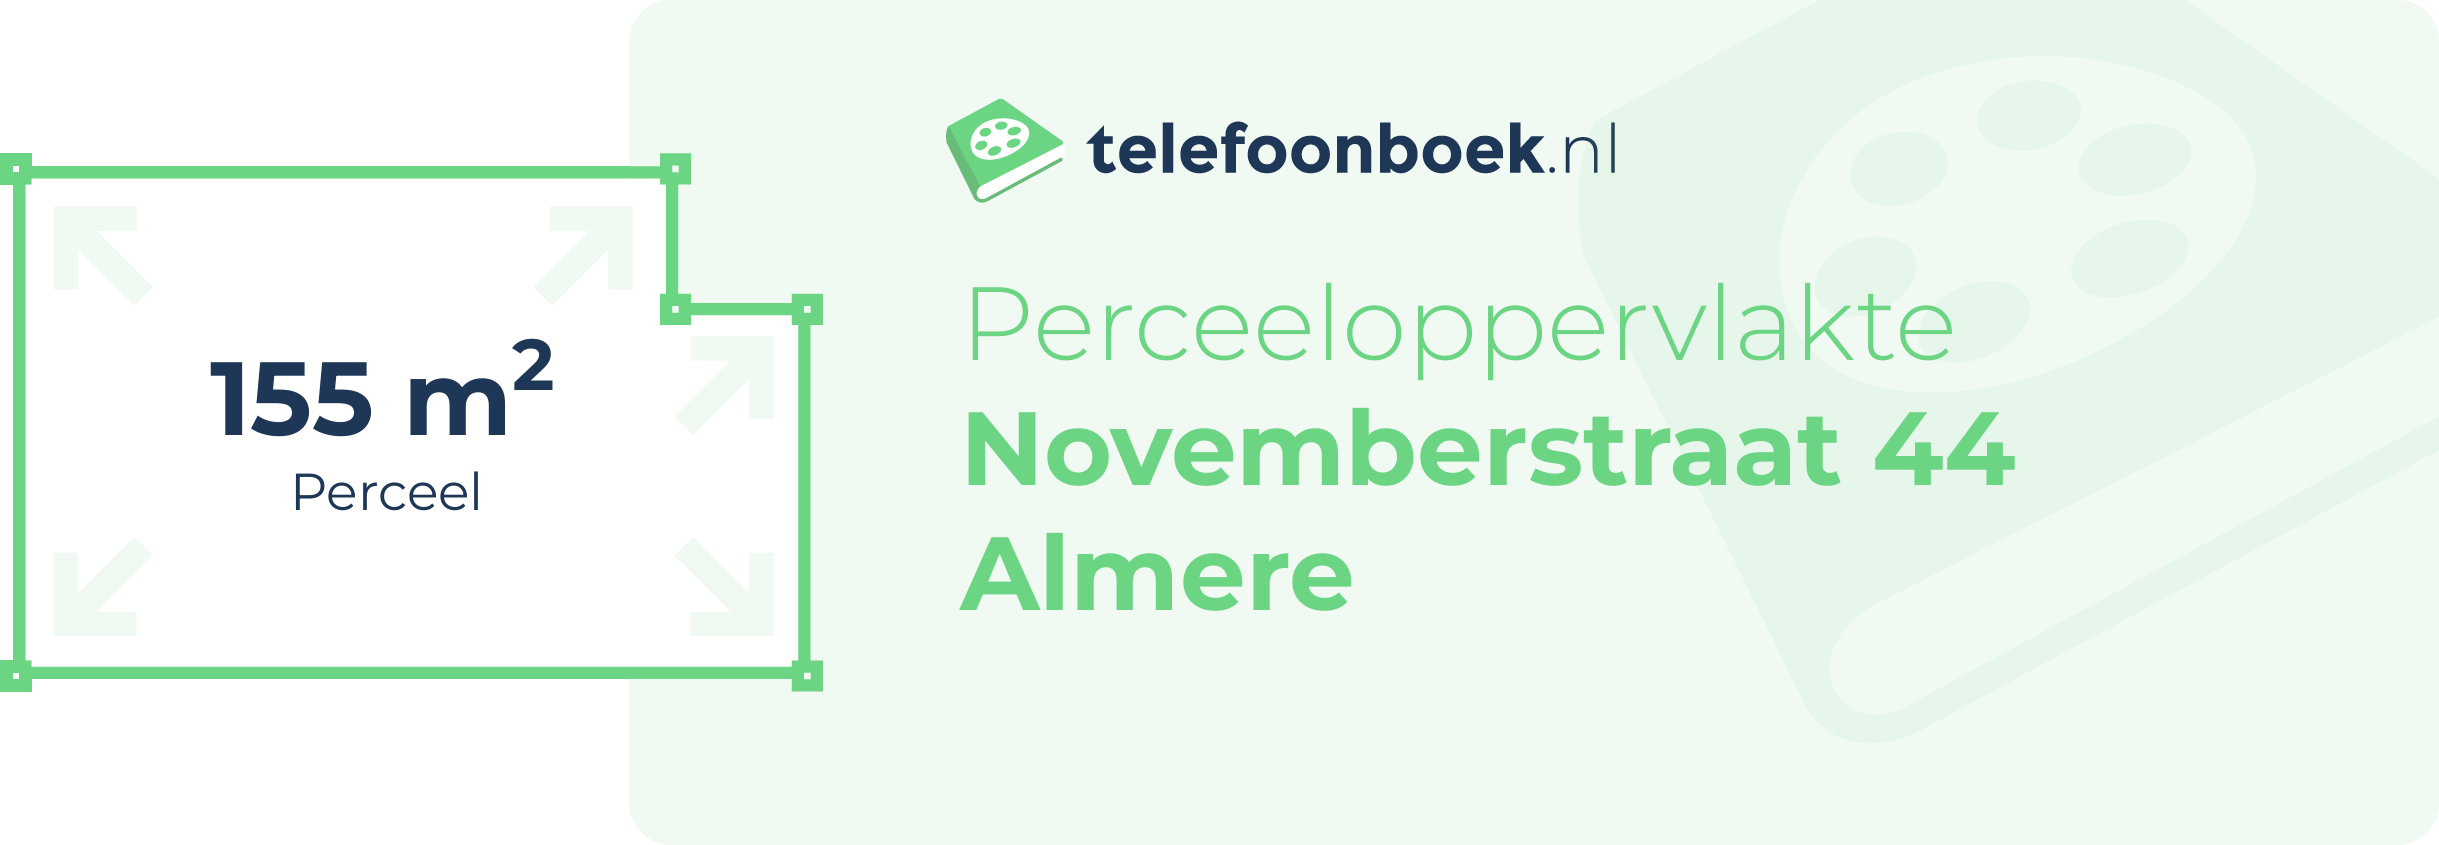 Perceeloppervlakte Novemberstraat 44 Almere